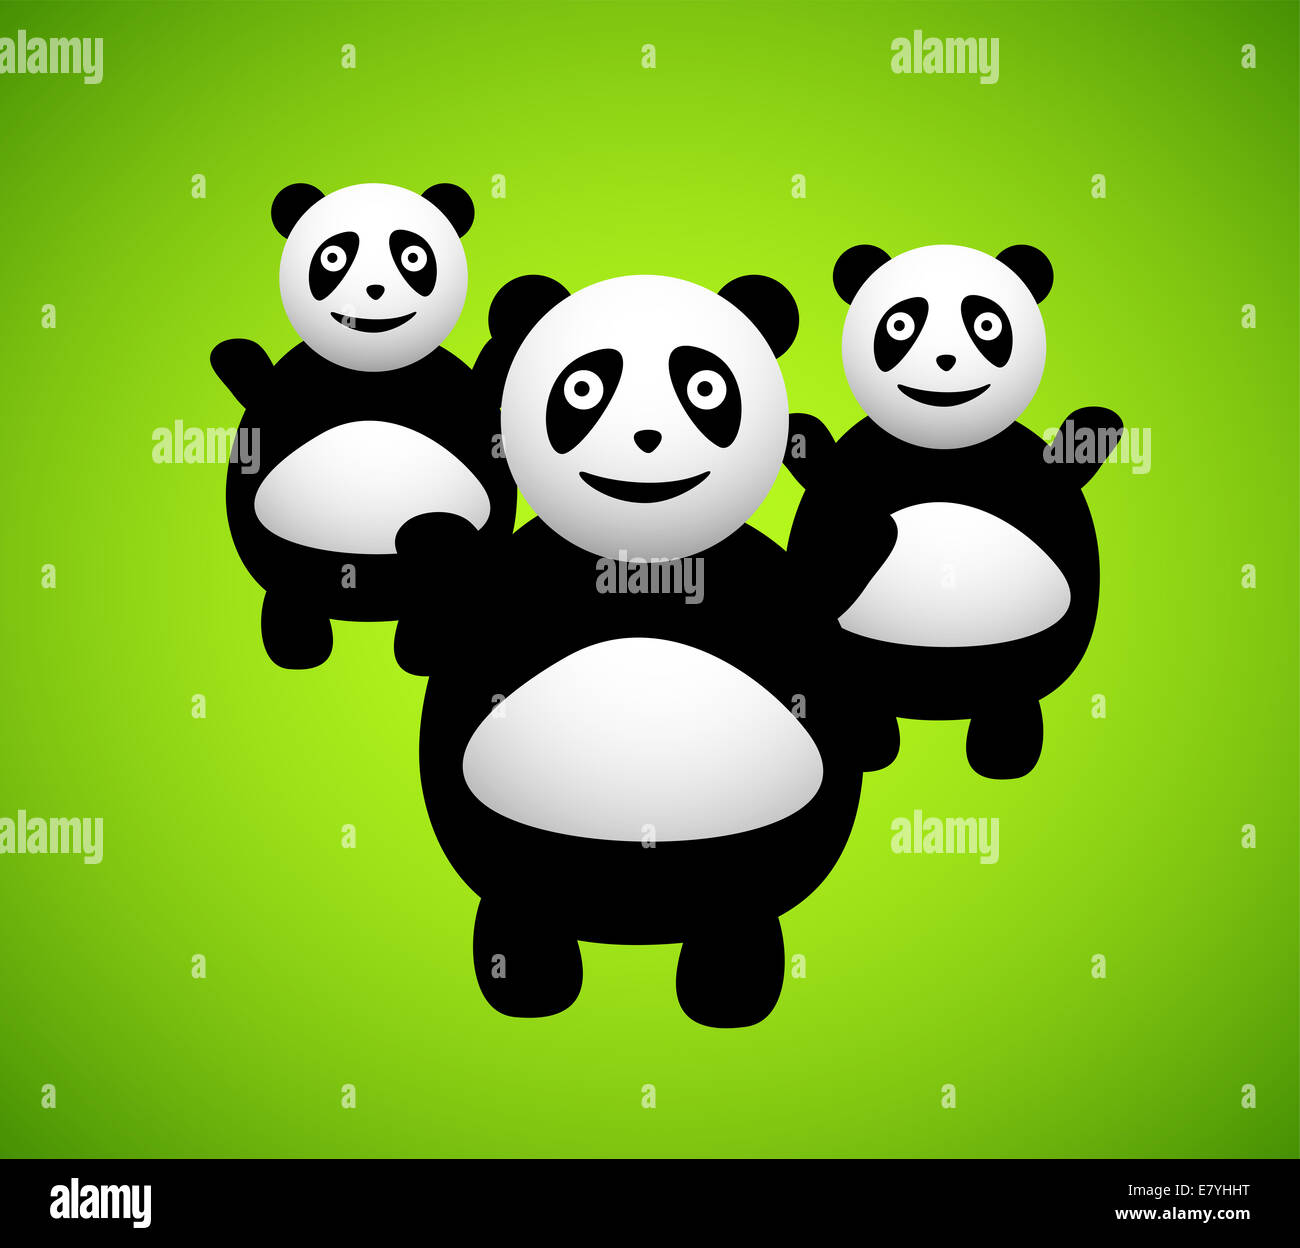 Panda cartoon character Stock Photo - Alamy